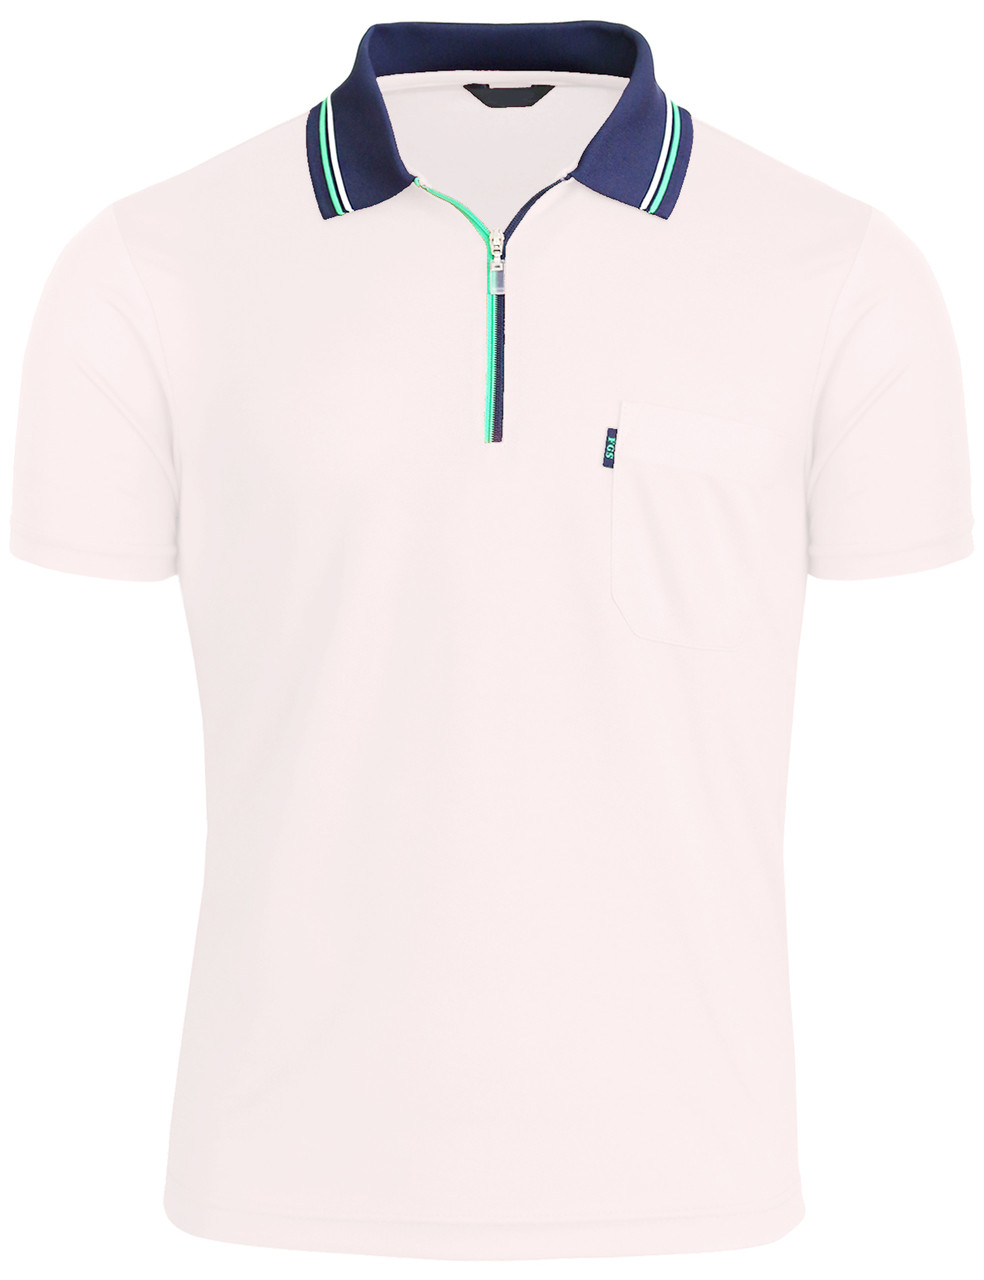 Short Sleeve Dri Fit Zip Polo Shirt-Unisex